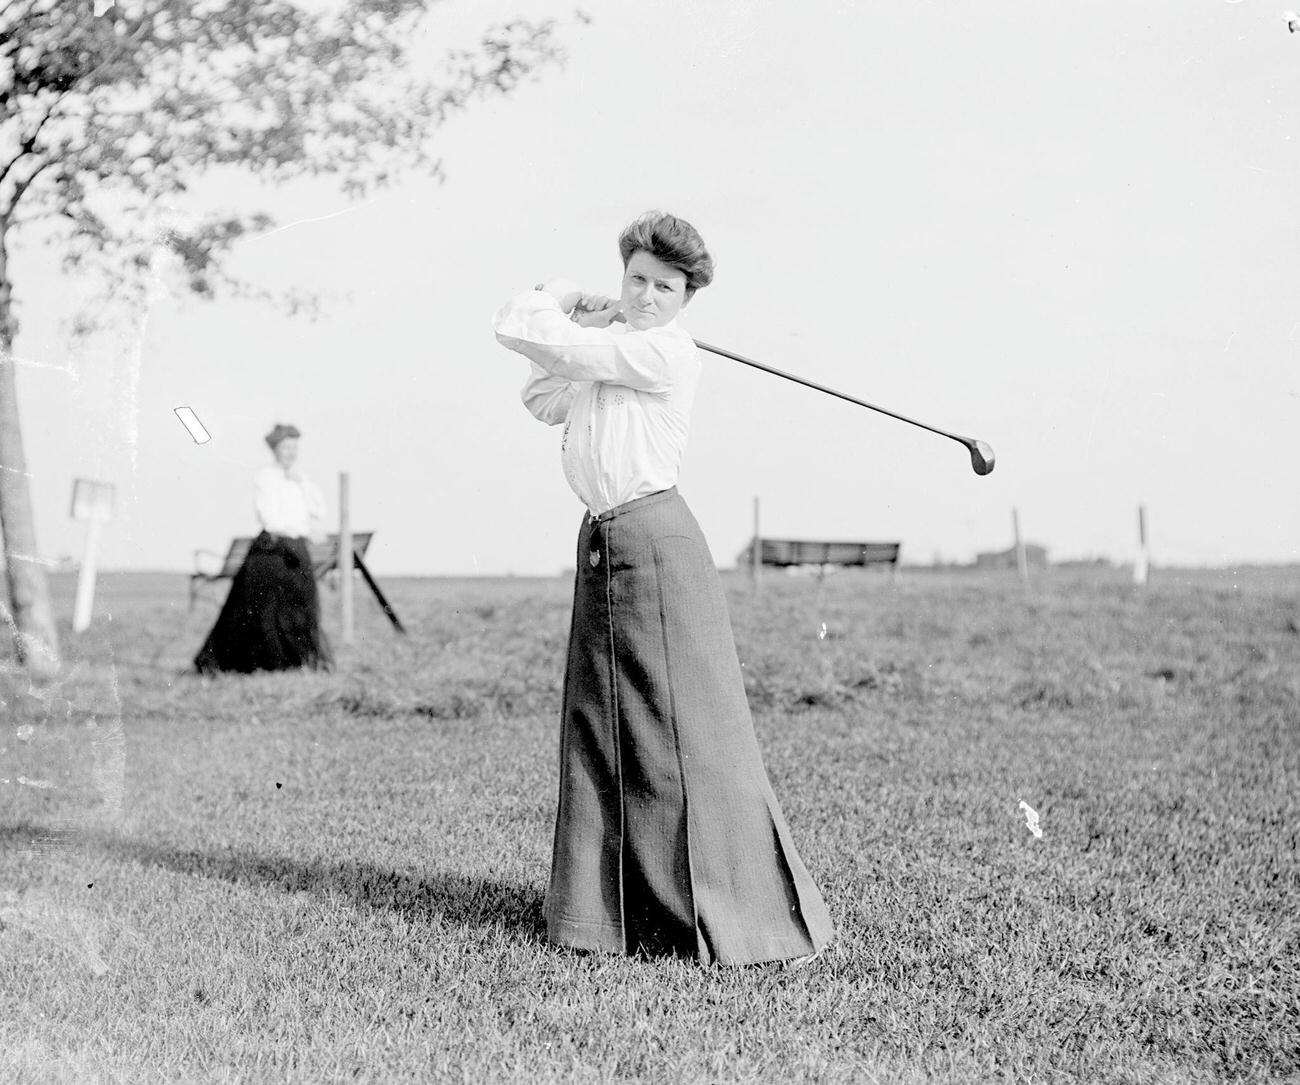 Mrs. T. A. Alexander golfing at Chicago Golf Club, Wheaton, 1909.